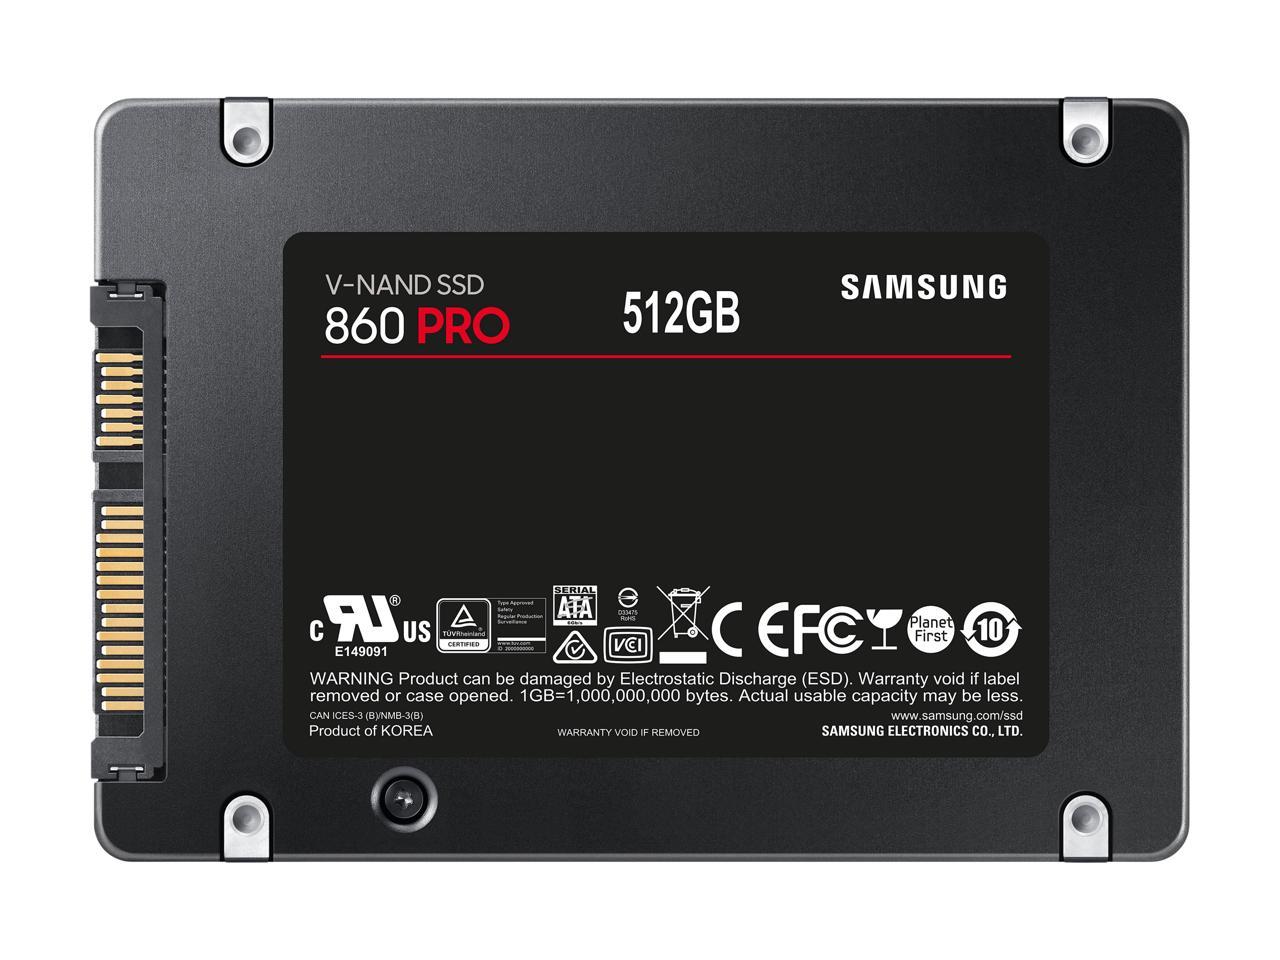 Samsung SSD 860 Pro 512GB 2.5" SATA III 3D NAND 512G Internal Solid State Drive 